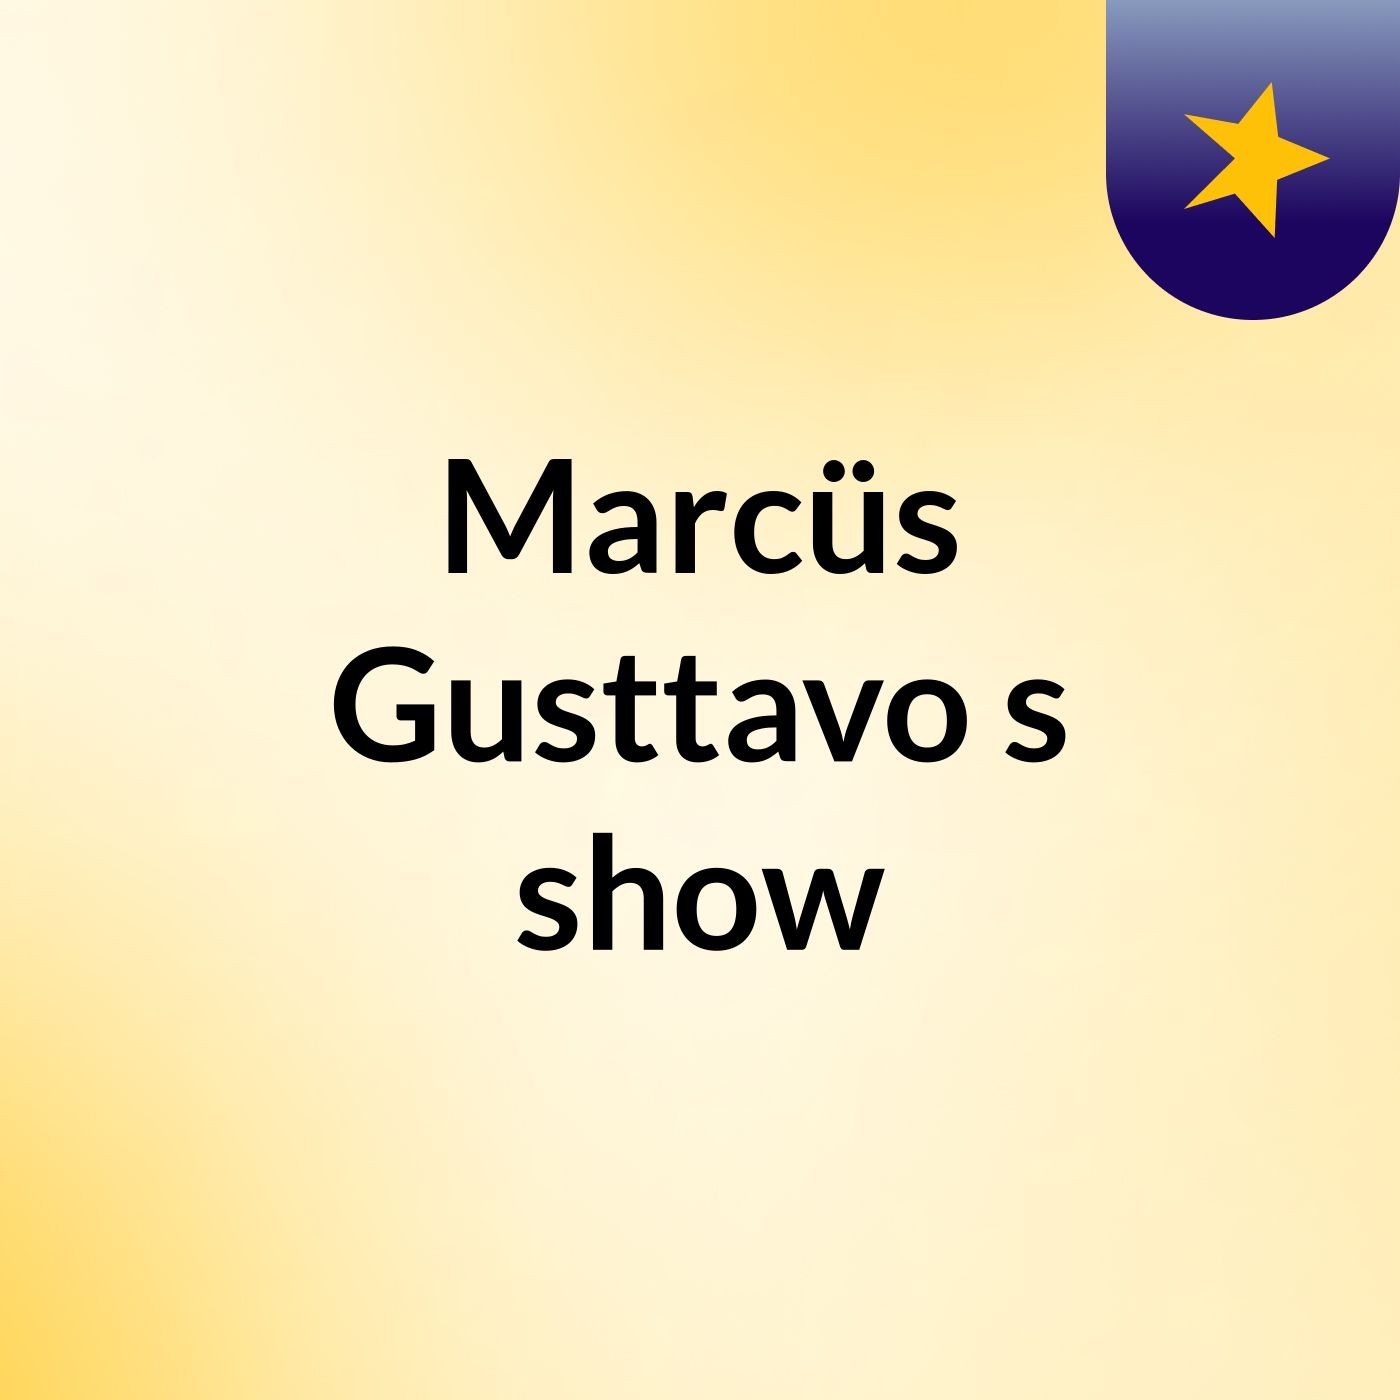 Marcüs Gusttavo's show